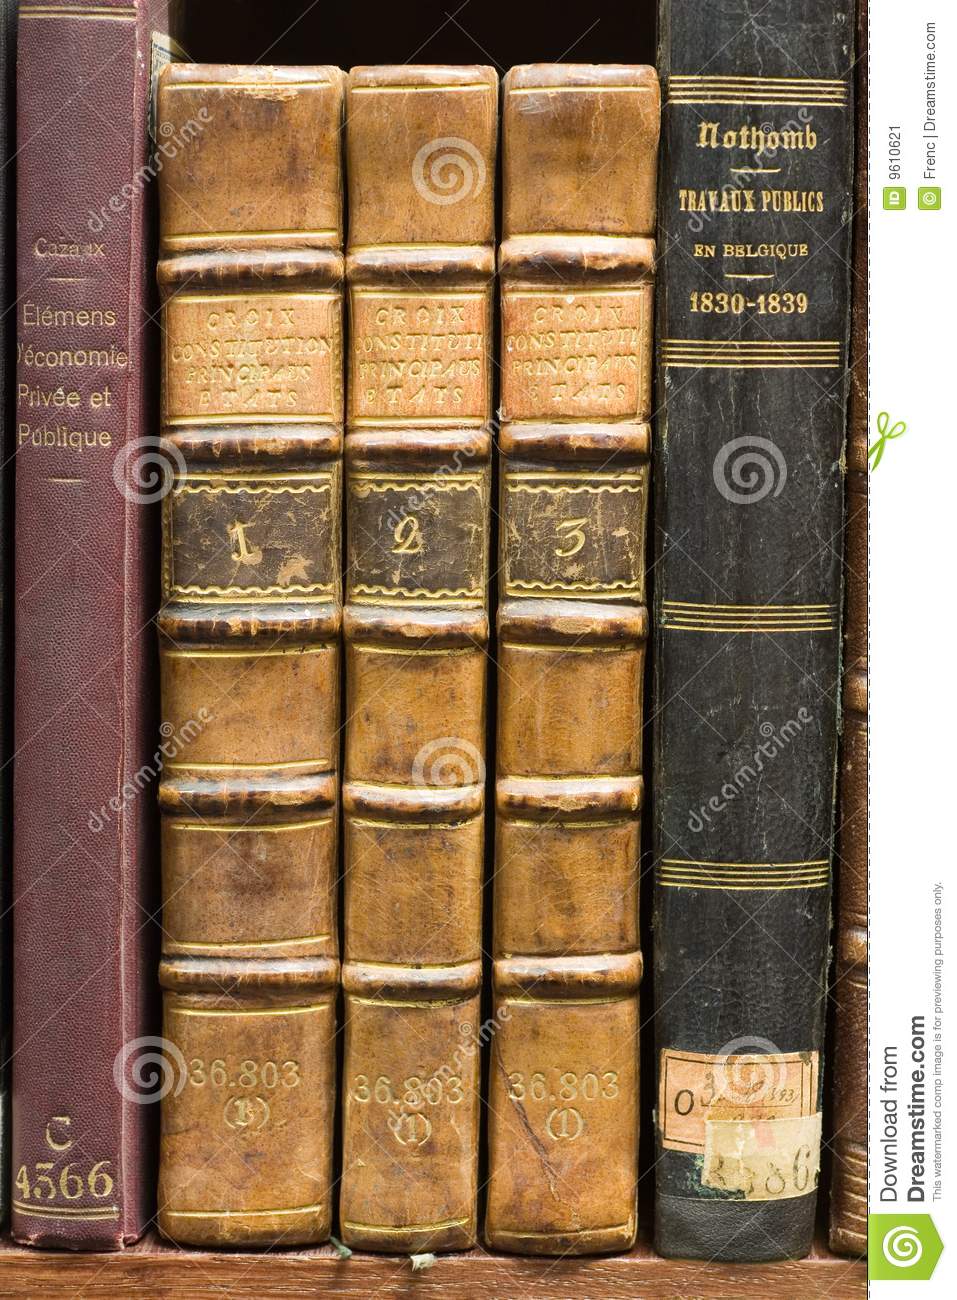 Old Books On The Shelf Stock Image   Image  9610621